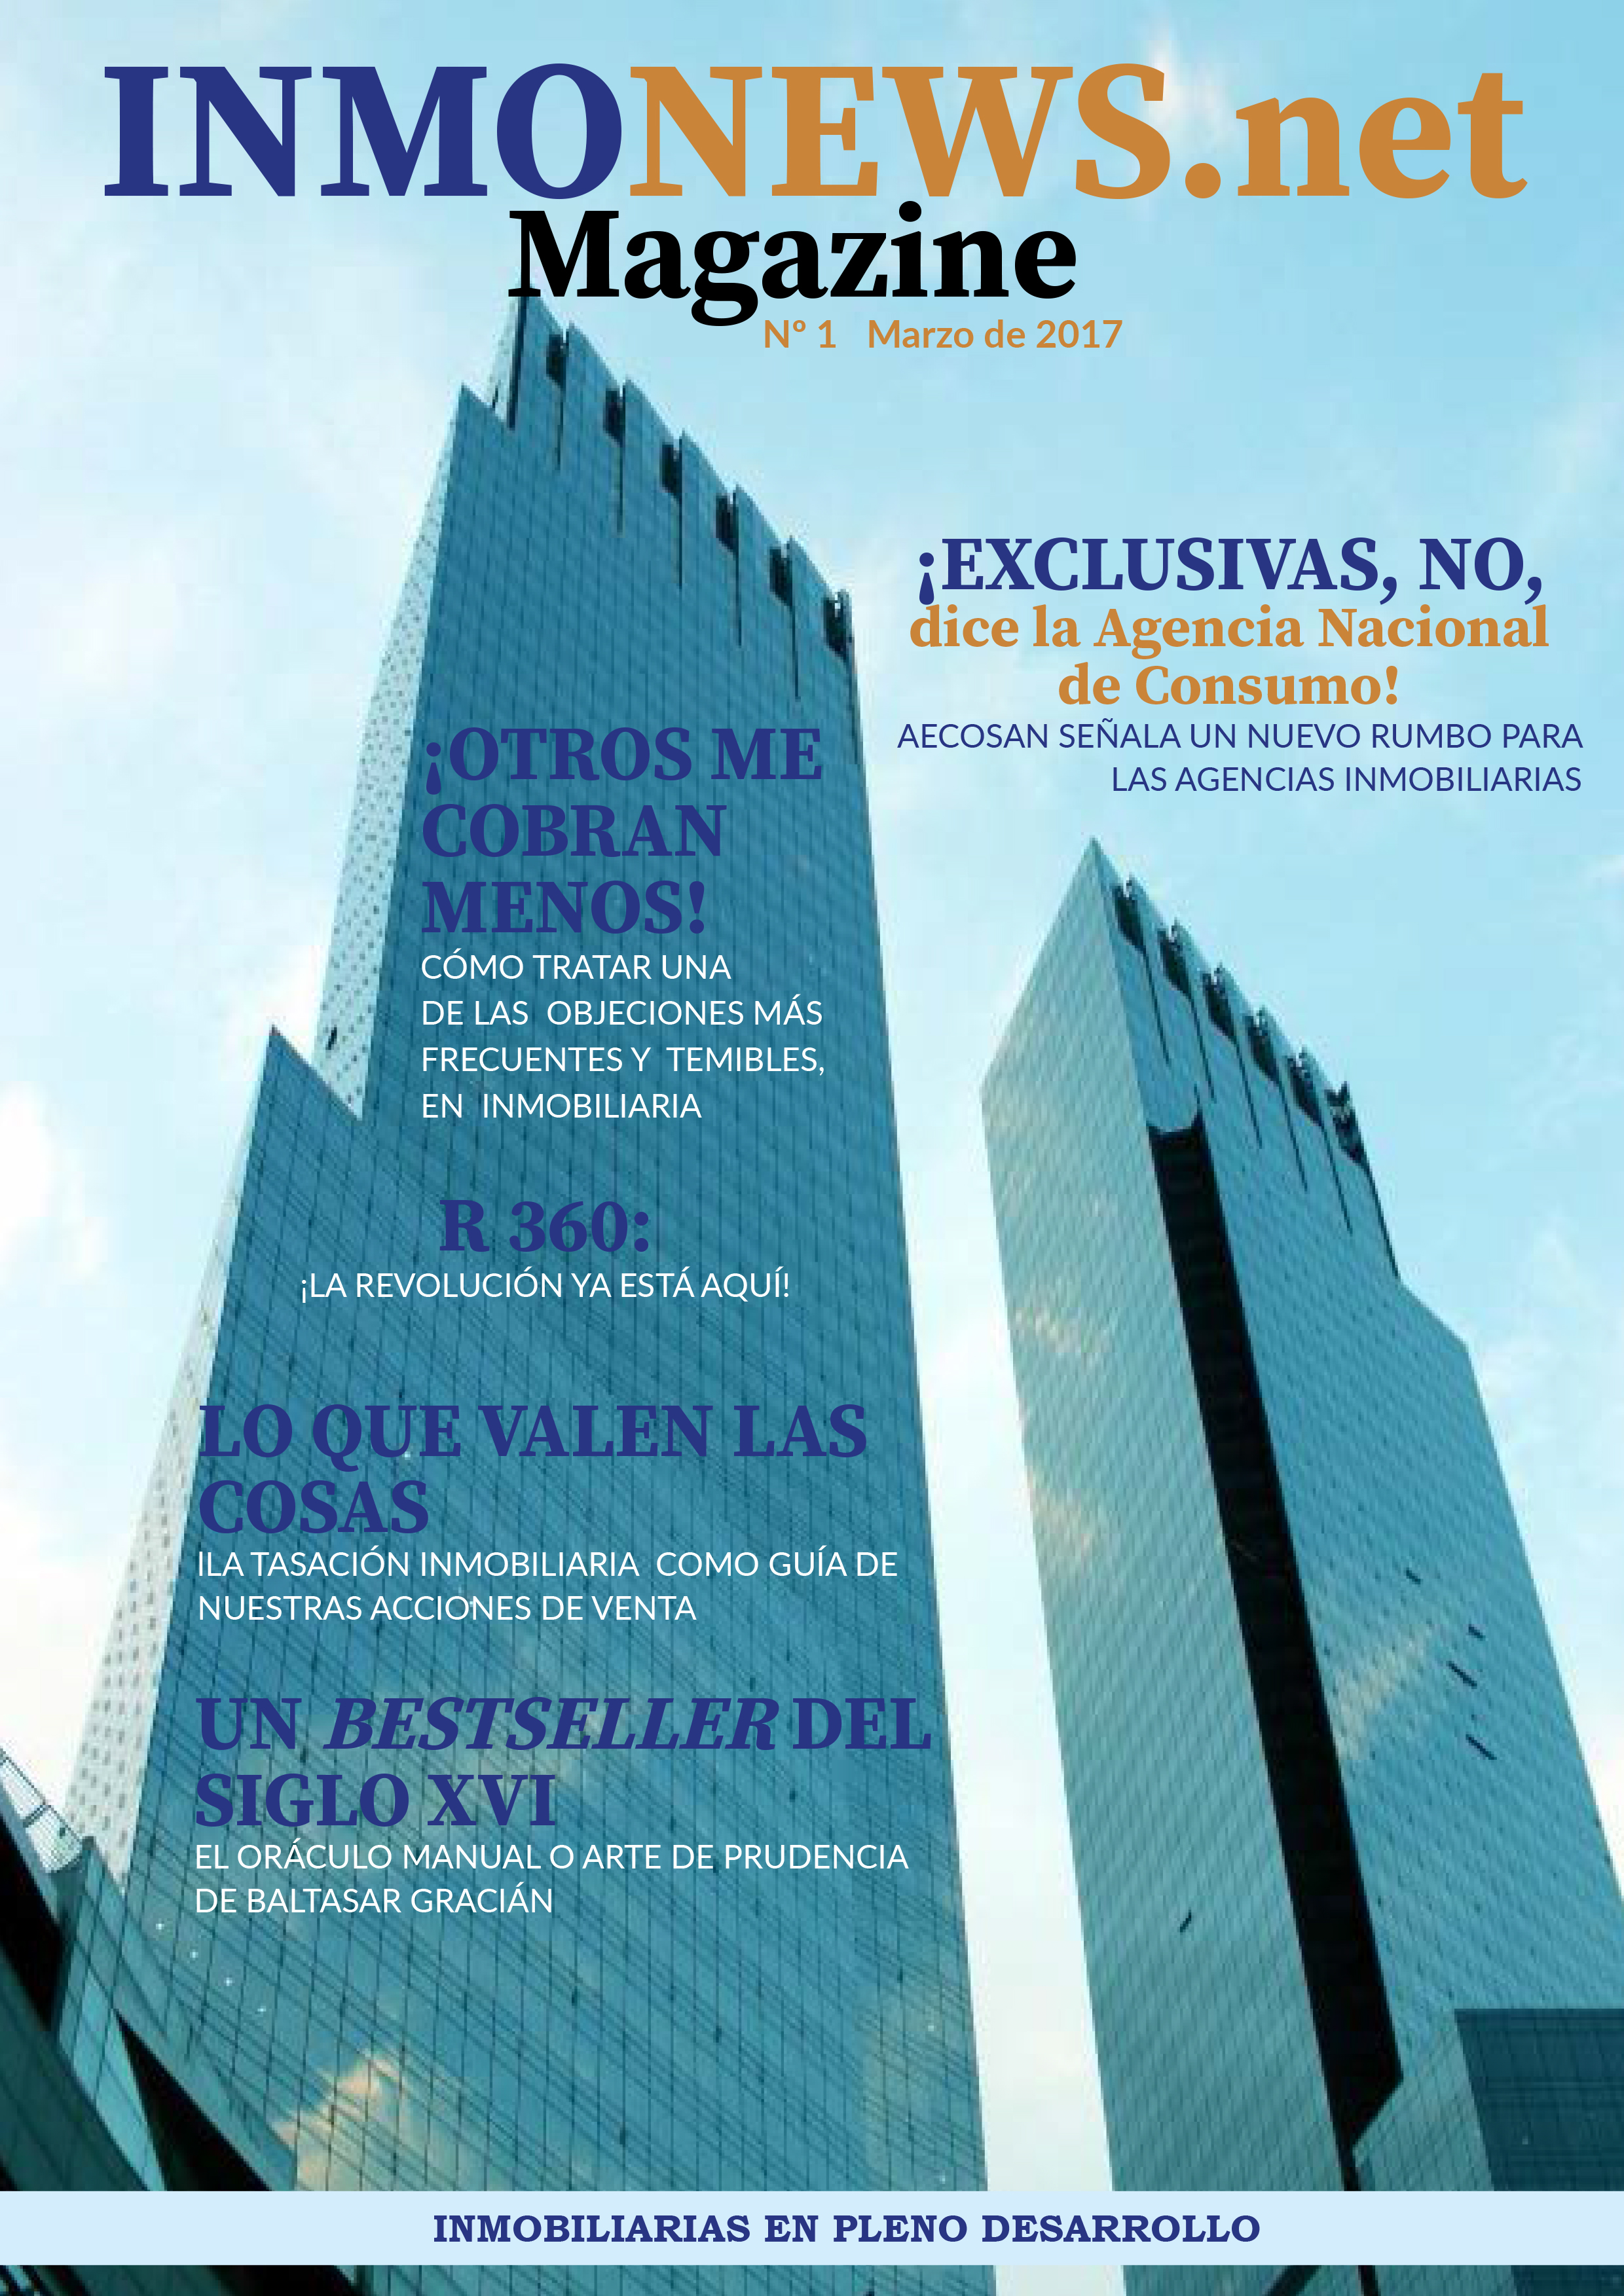 Ventasgrandes.net and Inmonews, moving forward together: real estate publication Inmonews Magazine